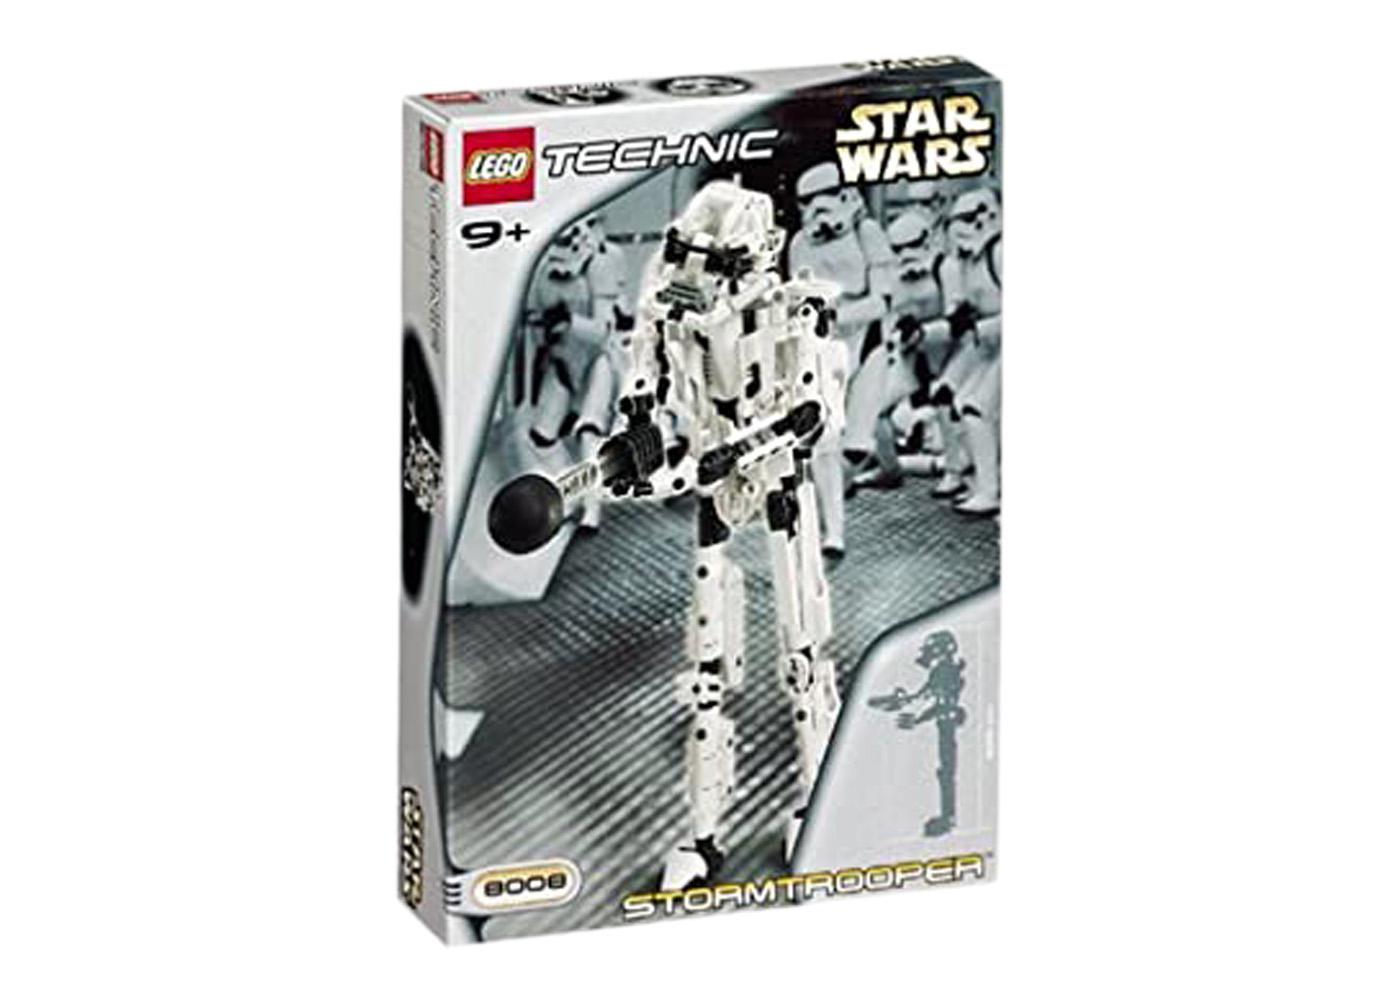 LEGO Star Wars Stormtrooper Set 8008